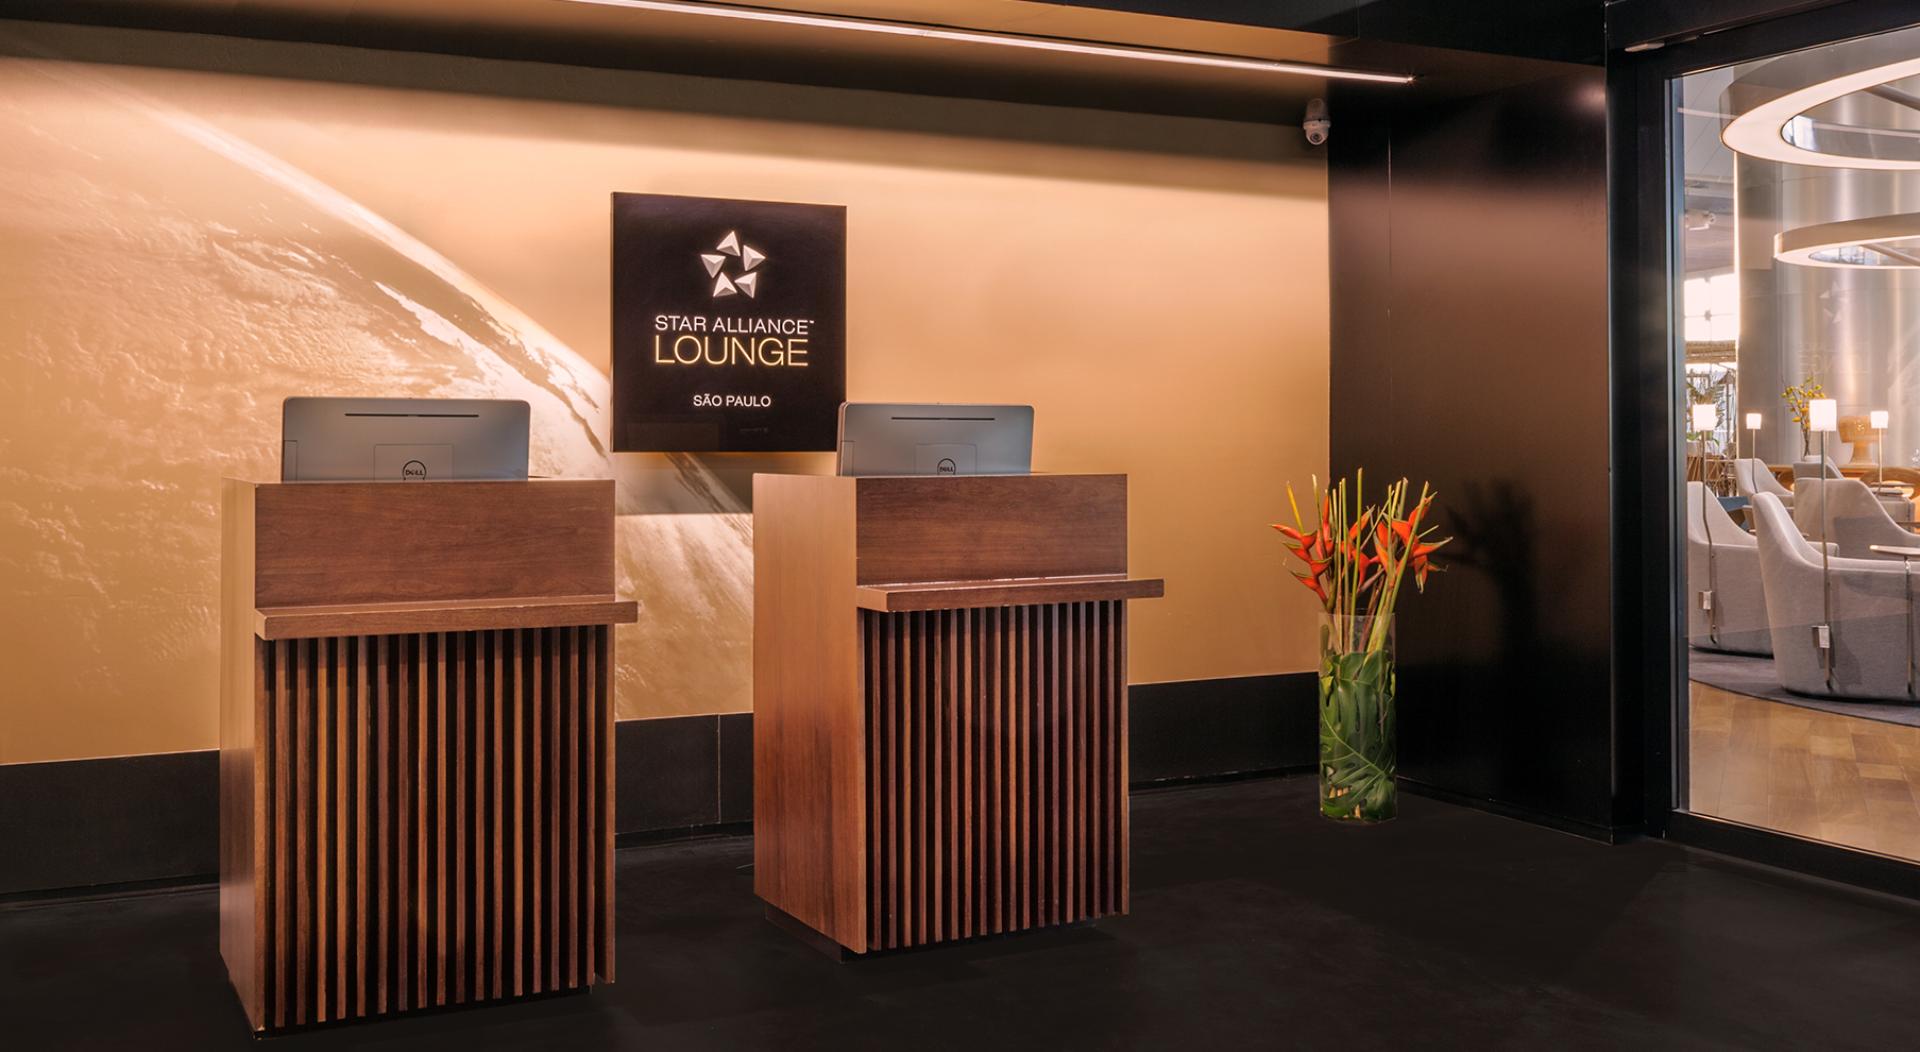 Star Alliance Lounge São Paulo